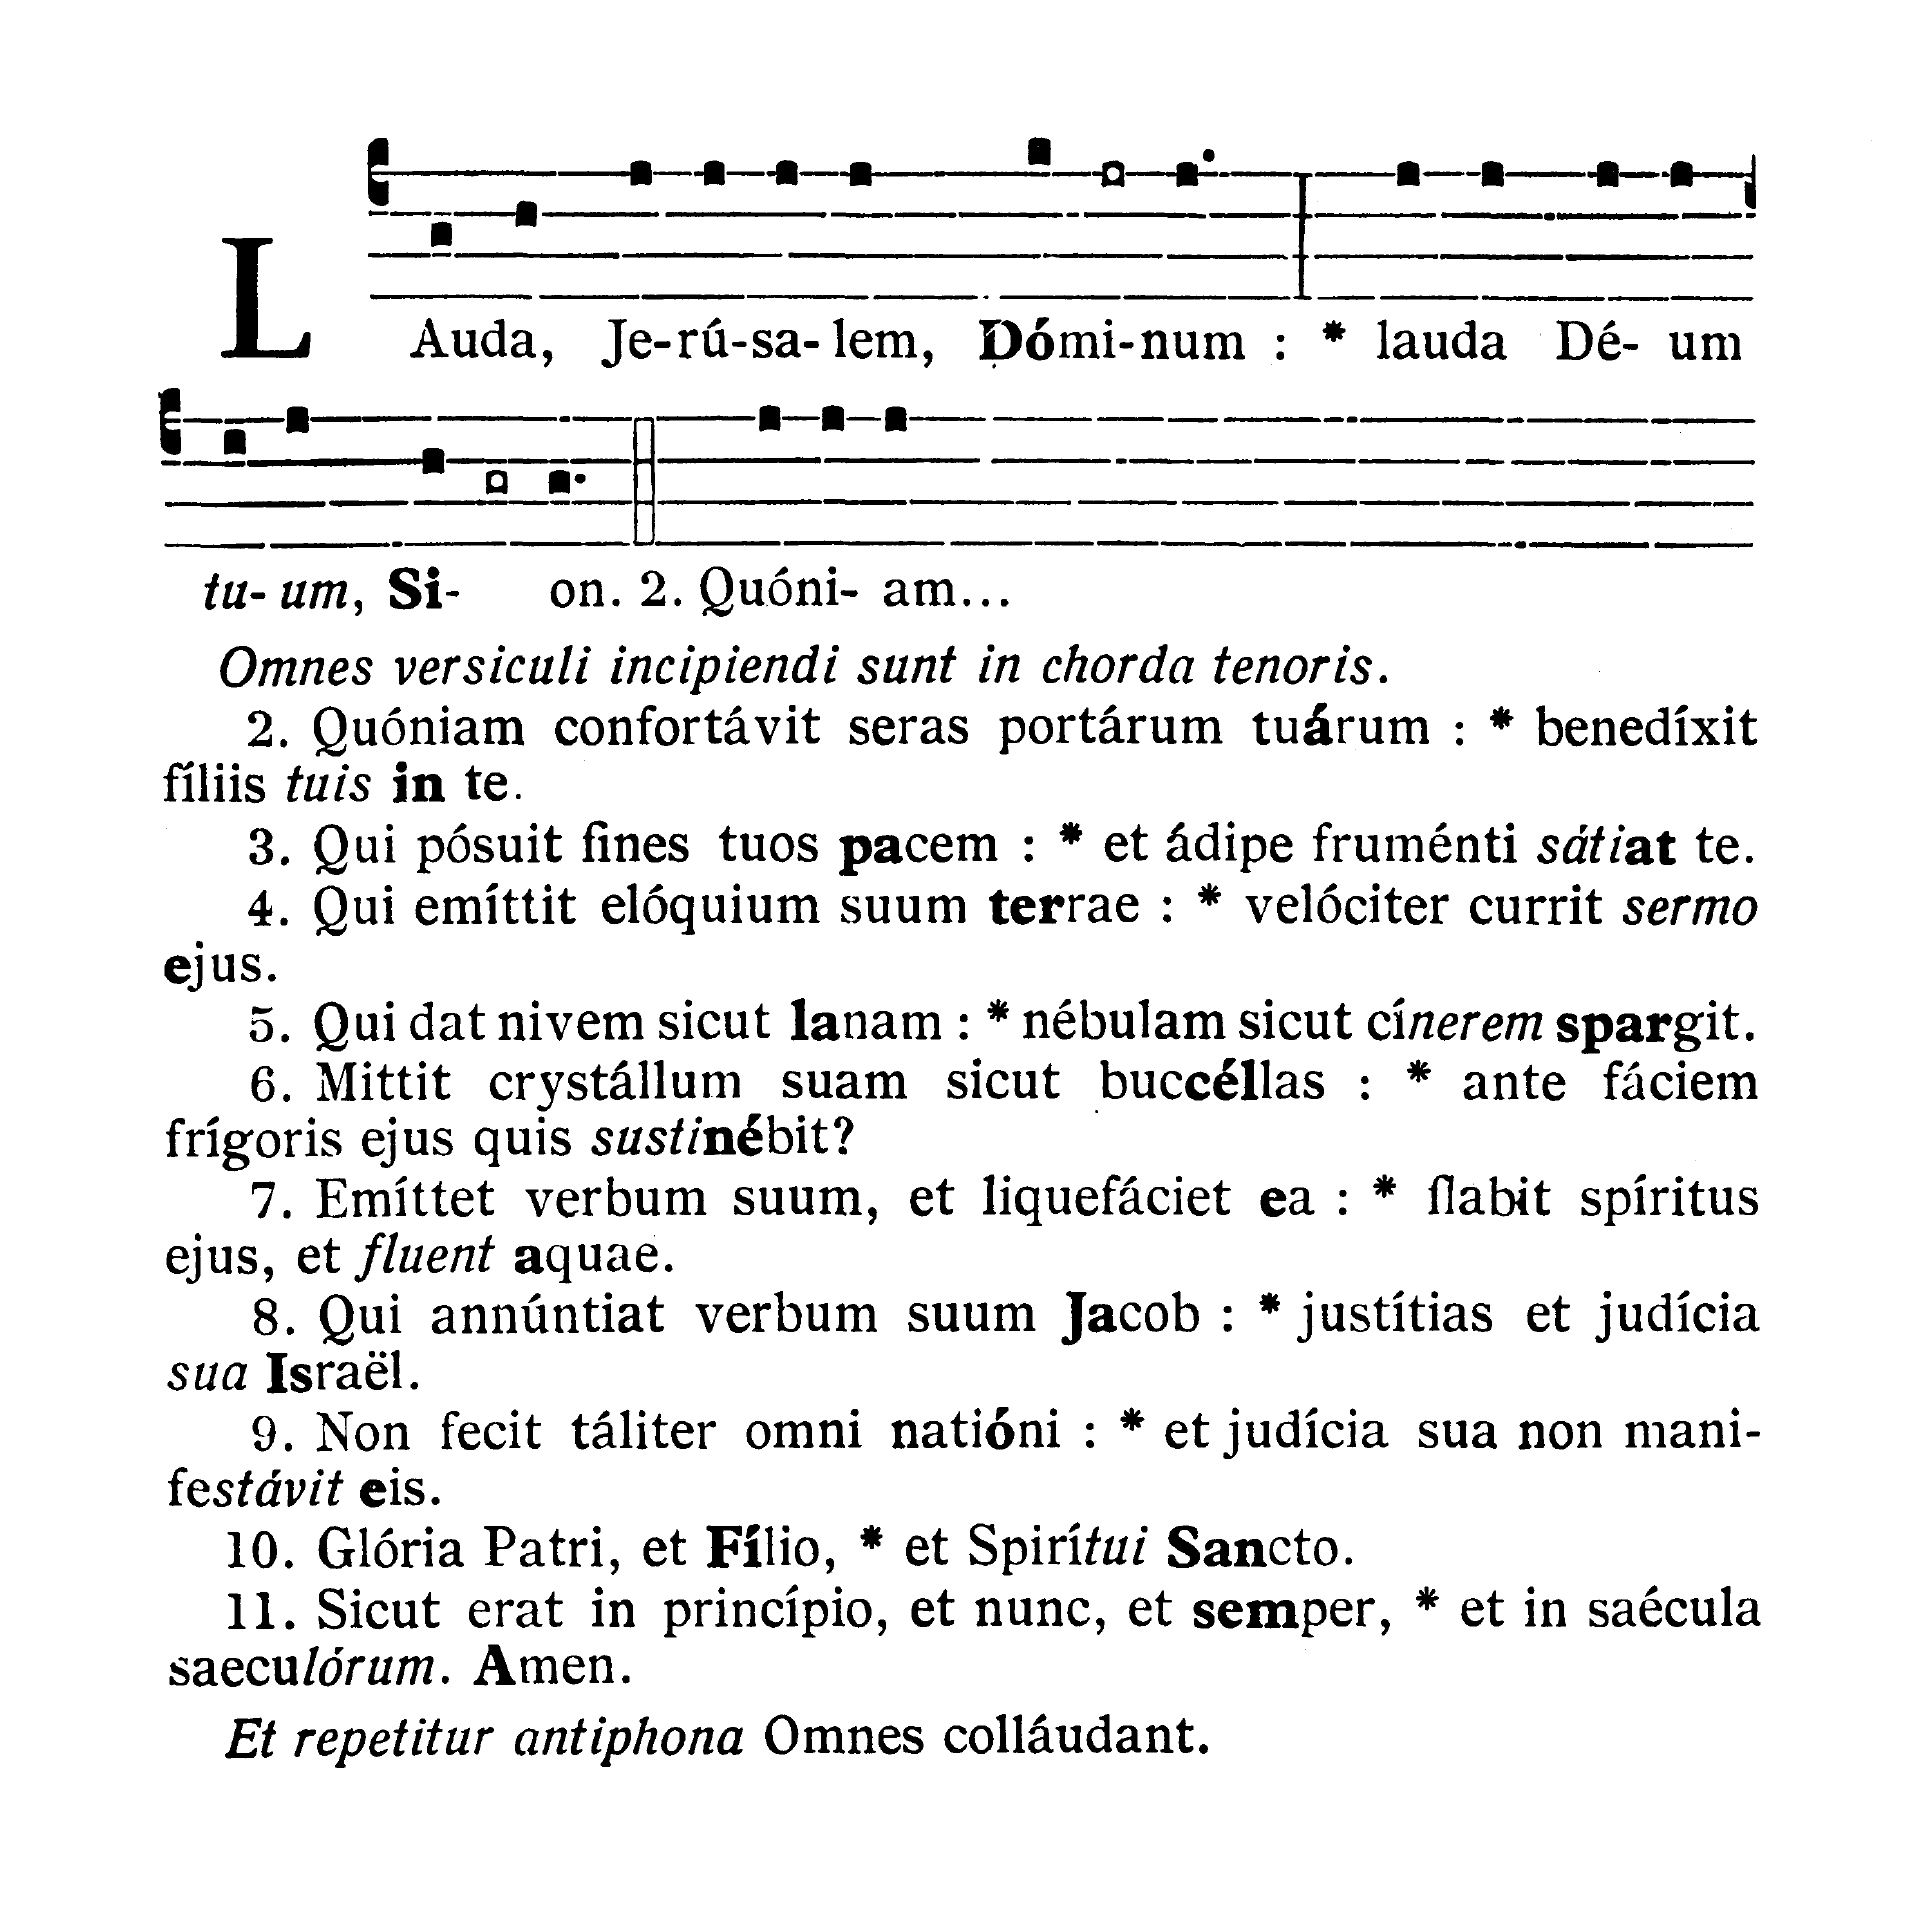 Dominica II in Passionis seu in Palmis (Palm Sunday) - Psalmus (Lauda Ierusalem Dominum)